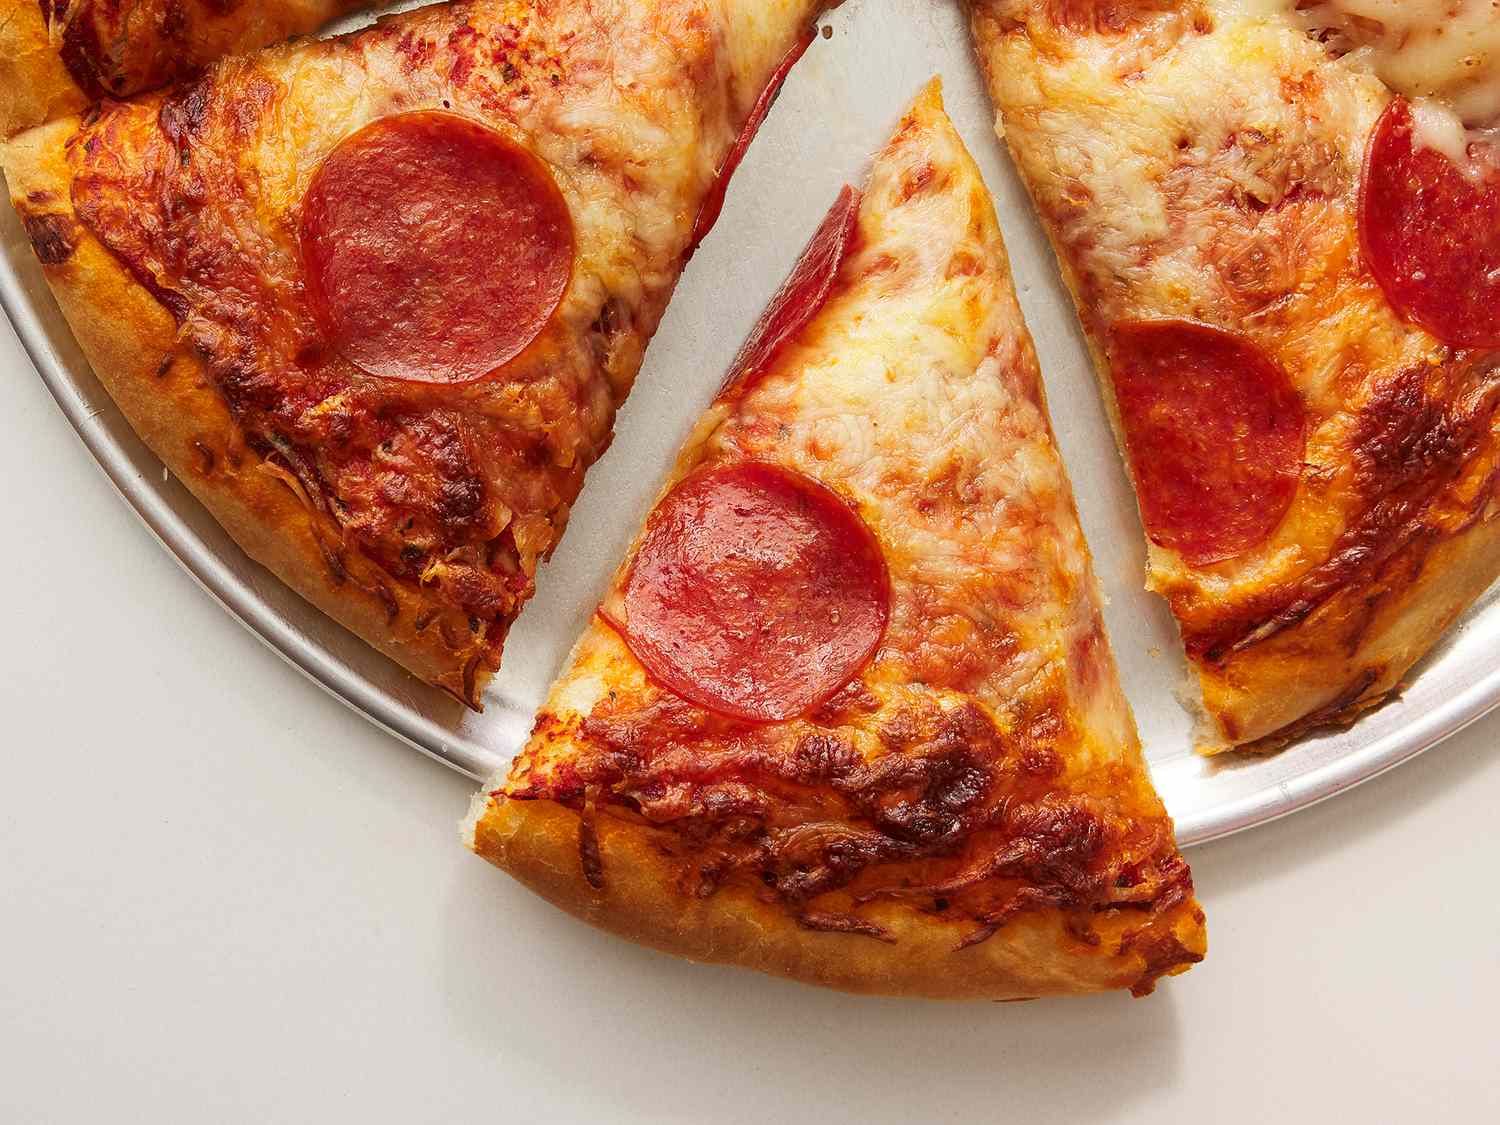 Домашняя пицца пепперони